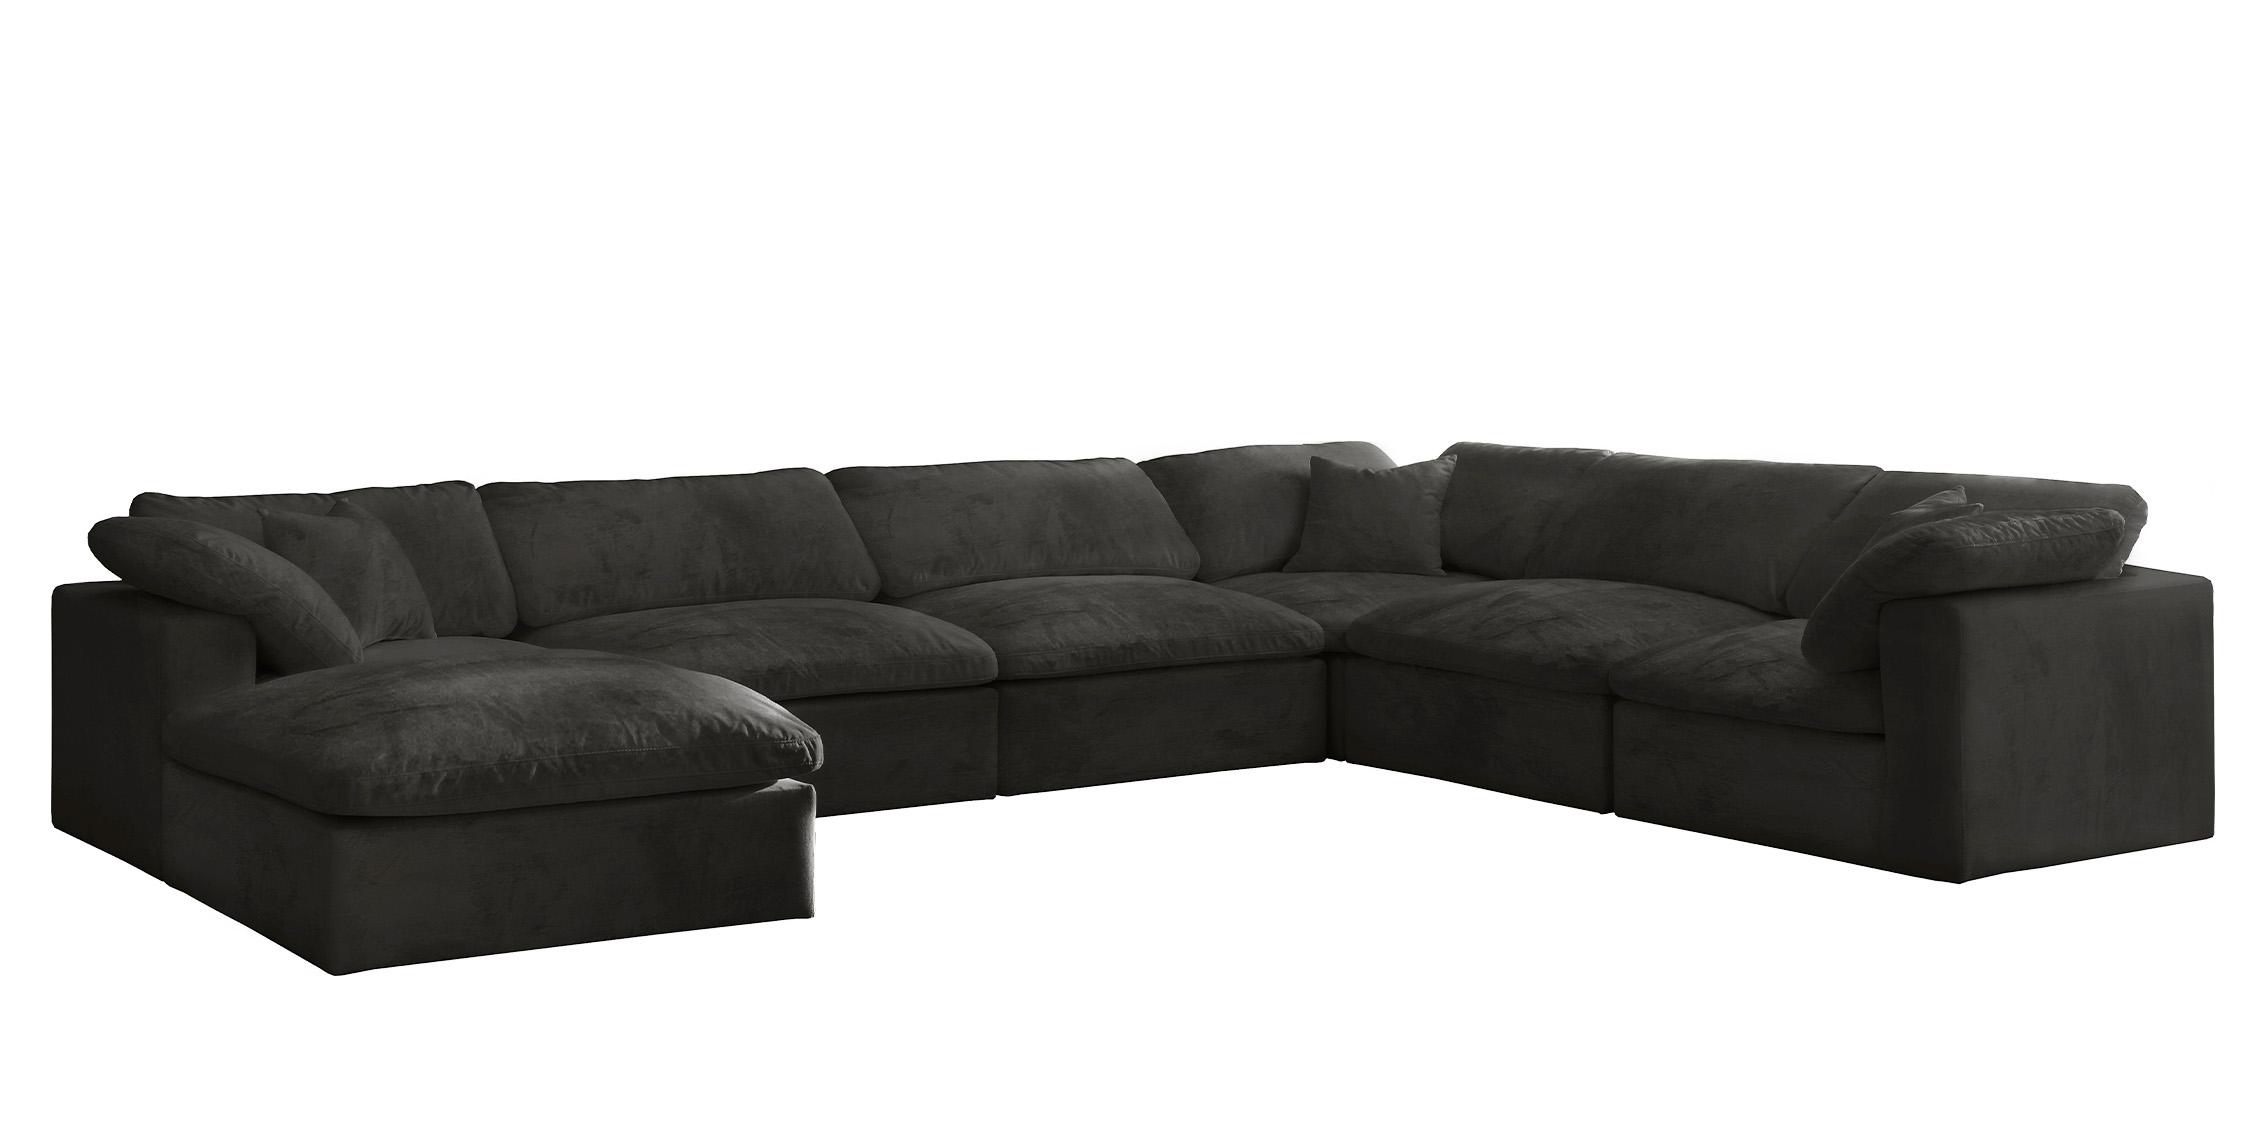 Contemporary, Modern Modular Sectional Sofa 634Black-Sec7A 634Black-Sec7A in Black Fabric